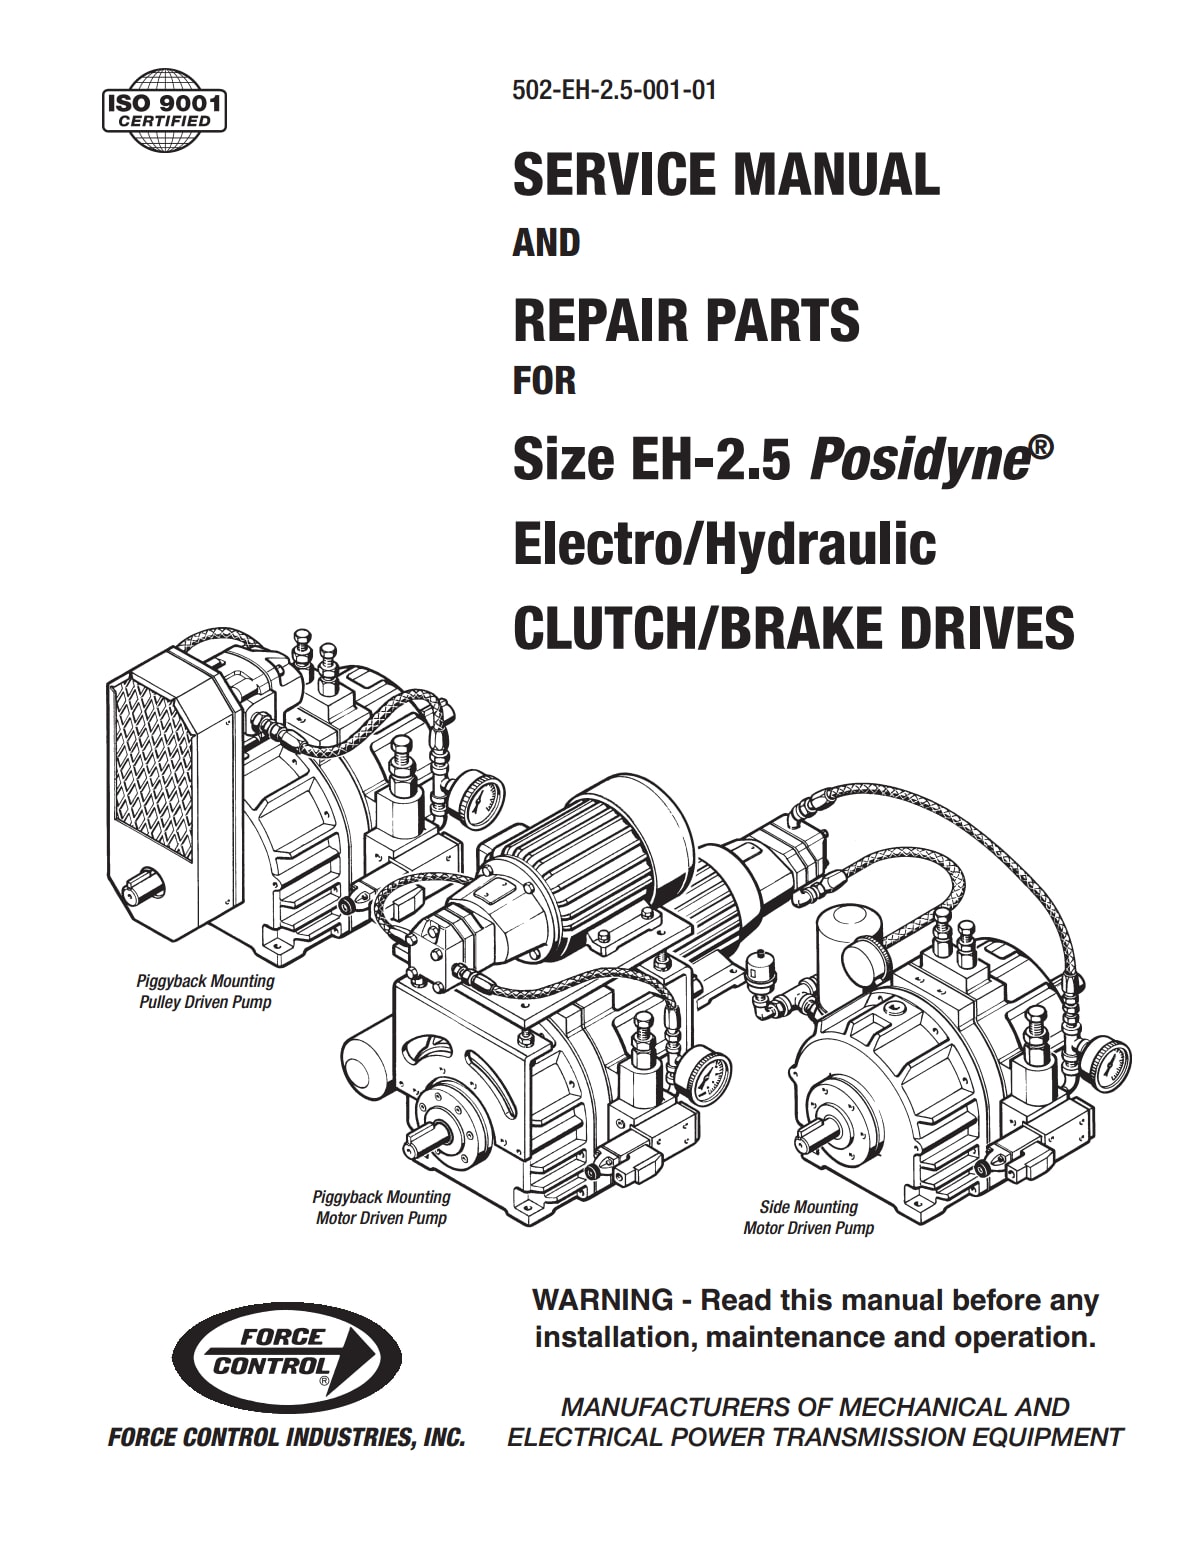 EH-2.5 Posidyne Service Manual